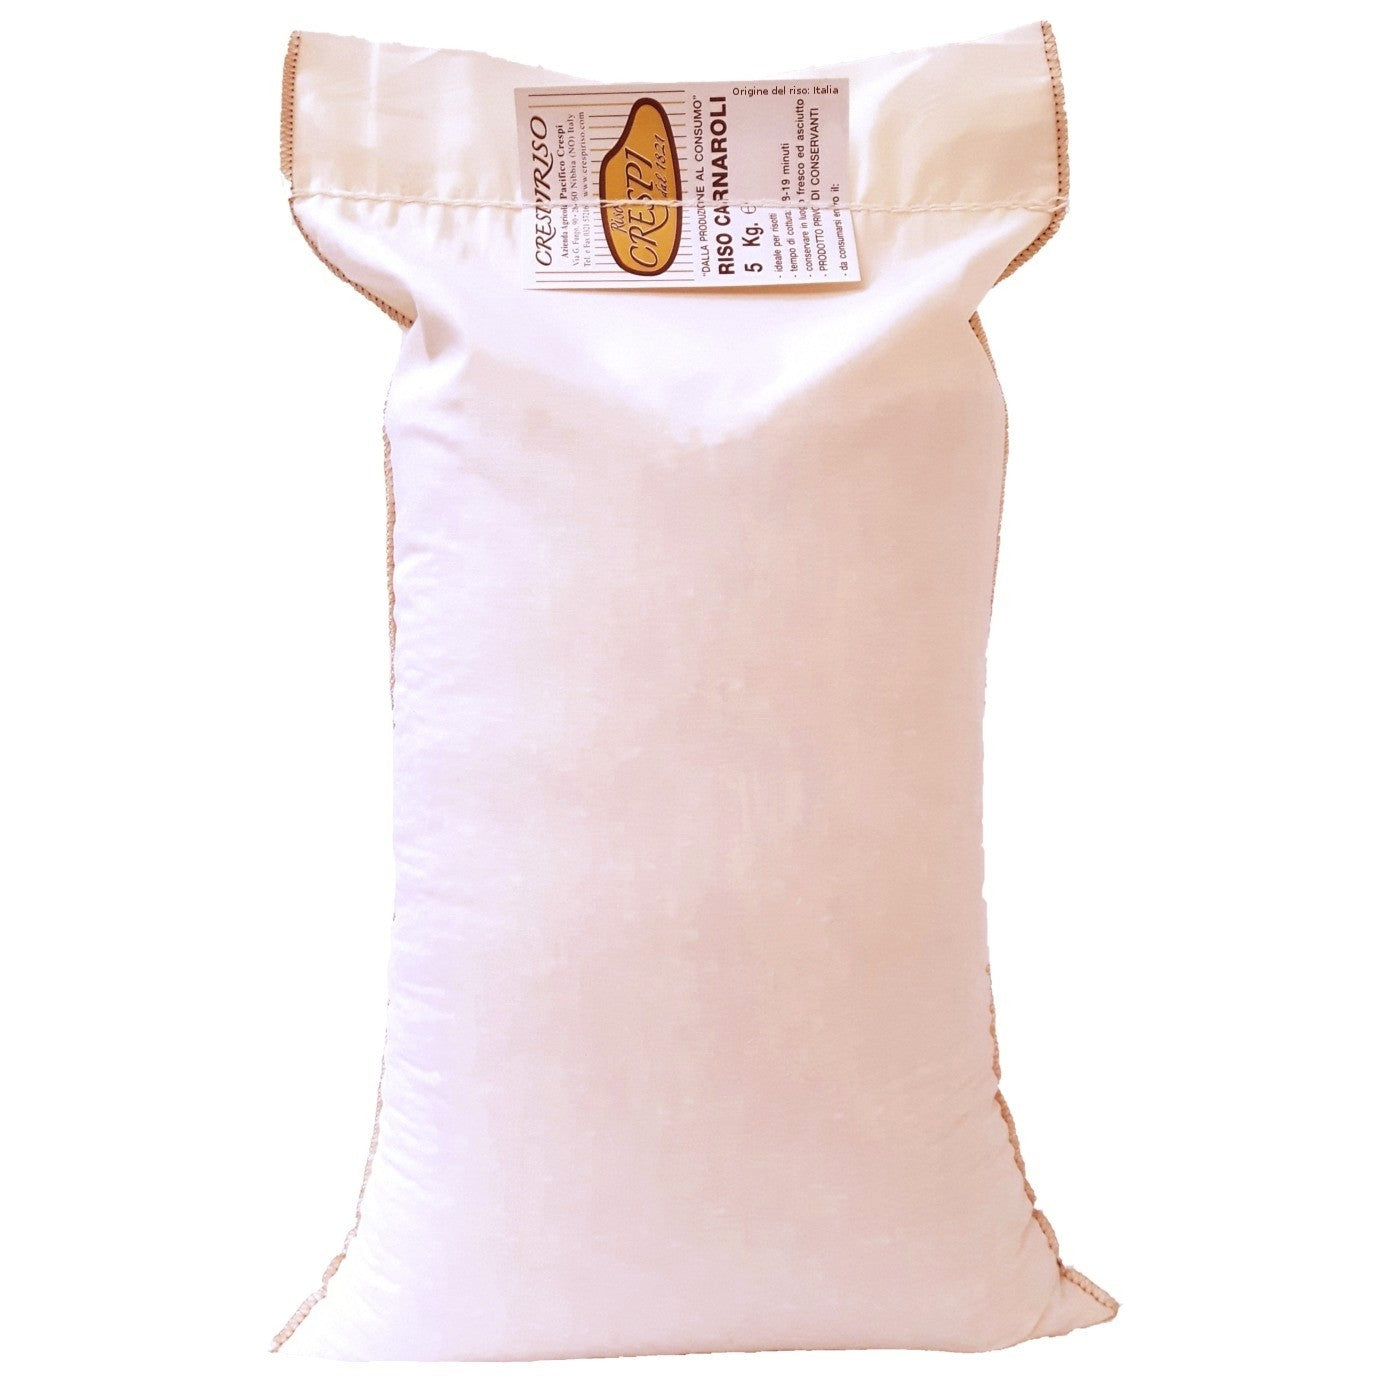 Carnaroli rice crespiriso 5kg pack in natural cotton